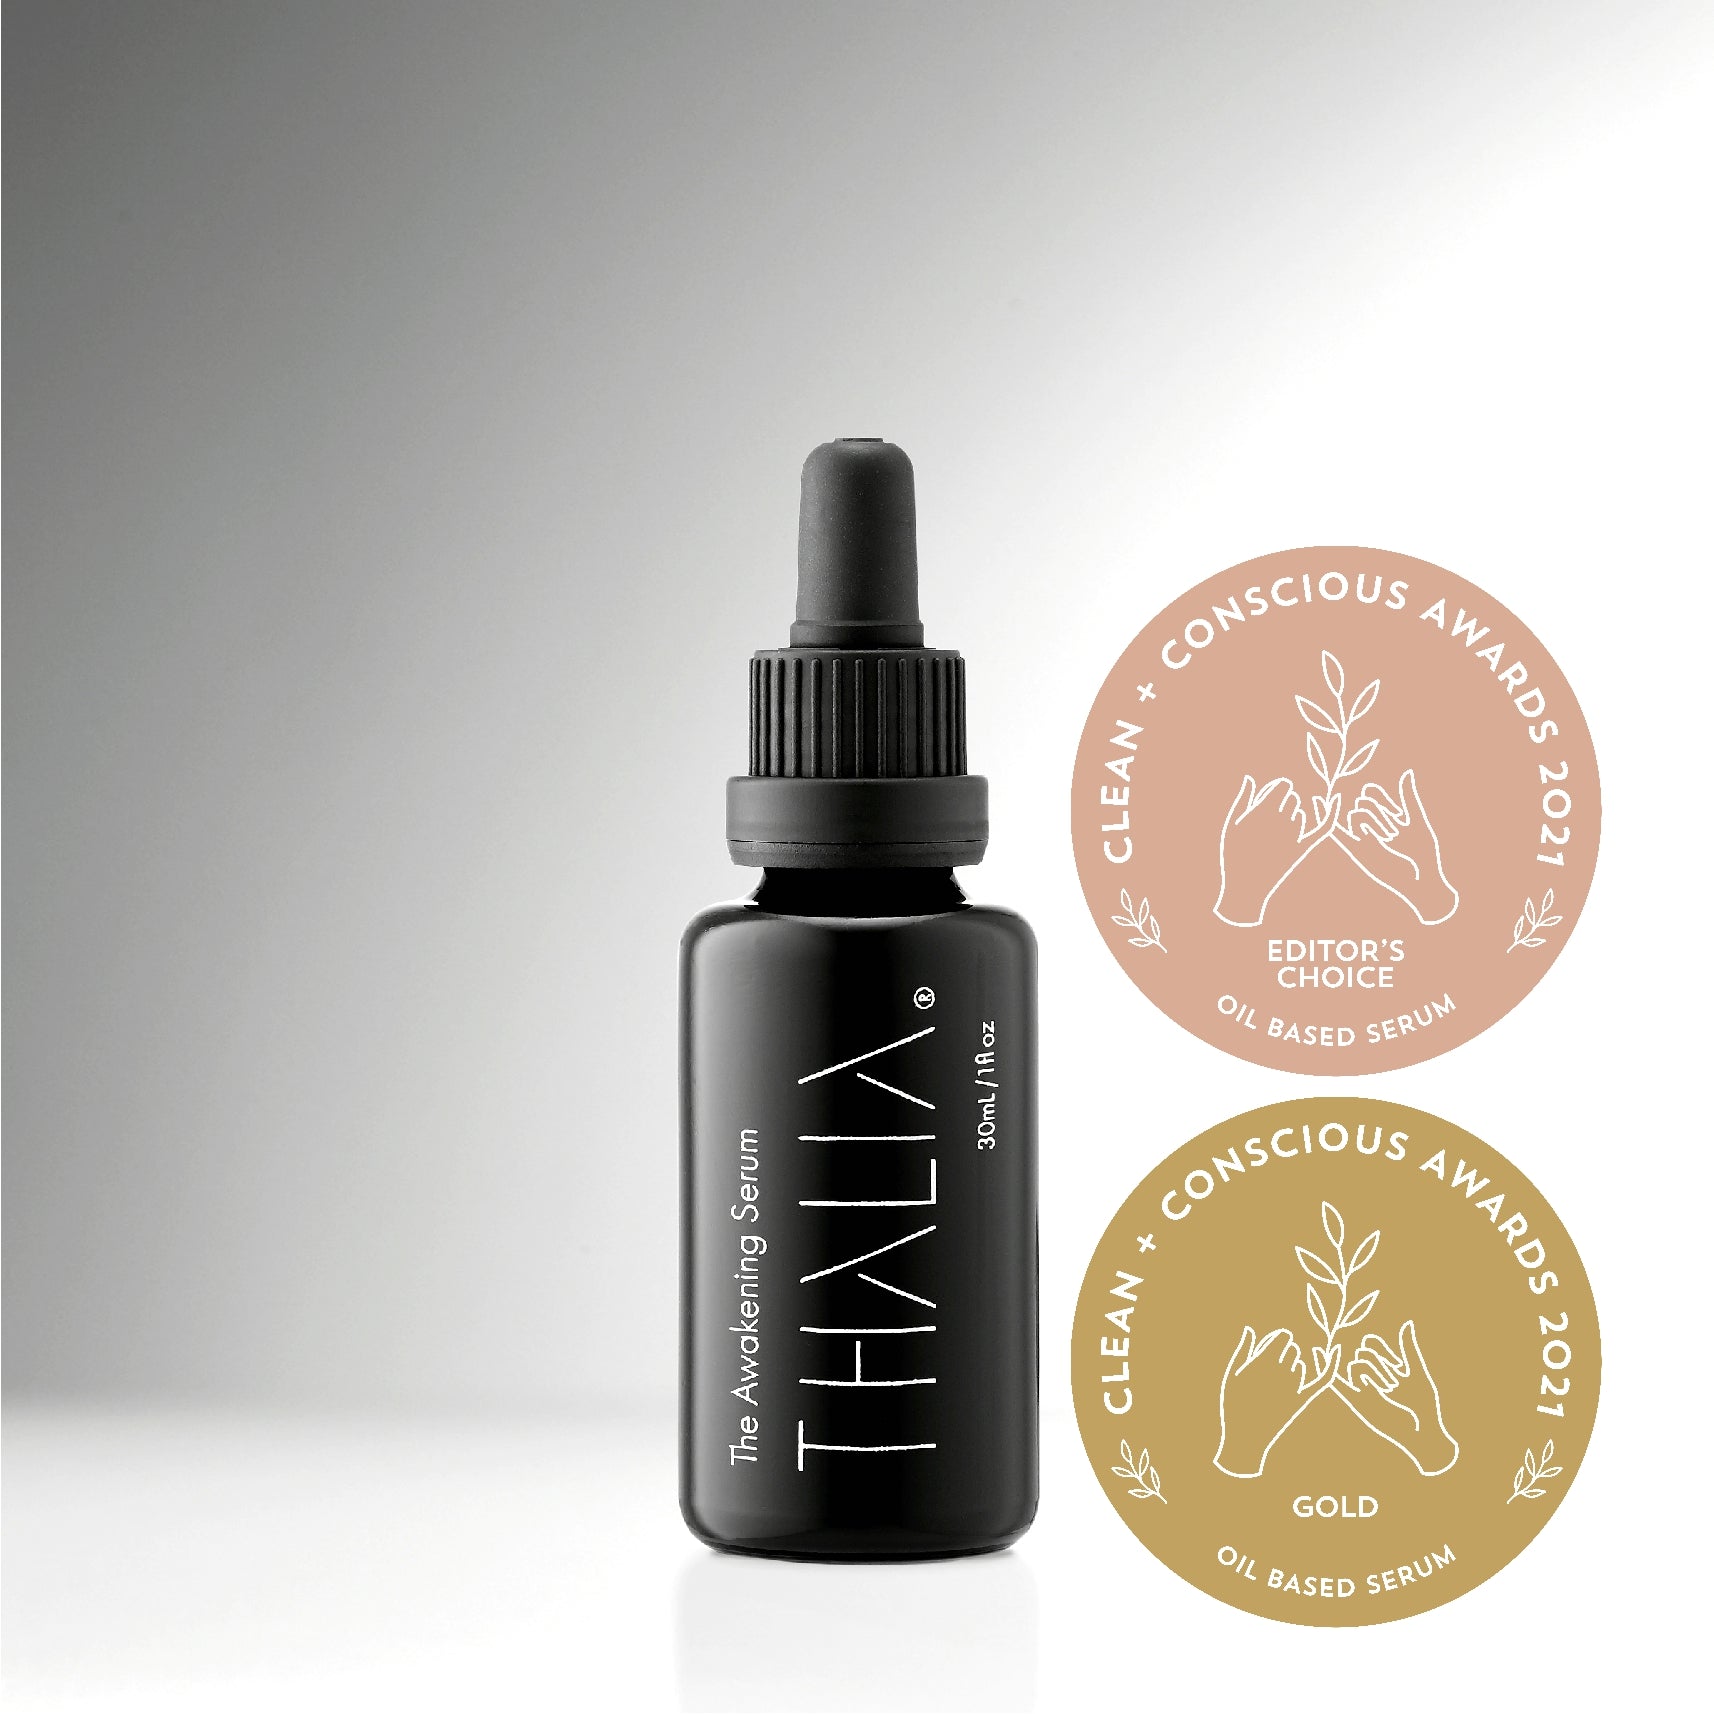 the-awakening-serum-thalia-skin-gold-clean-and-conscious-awards-2021